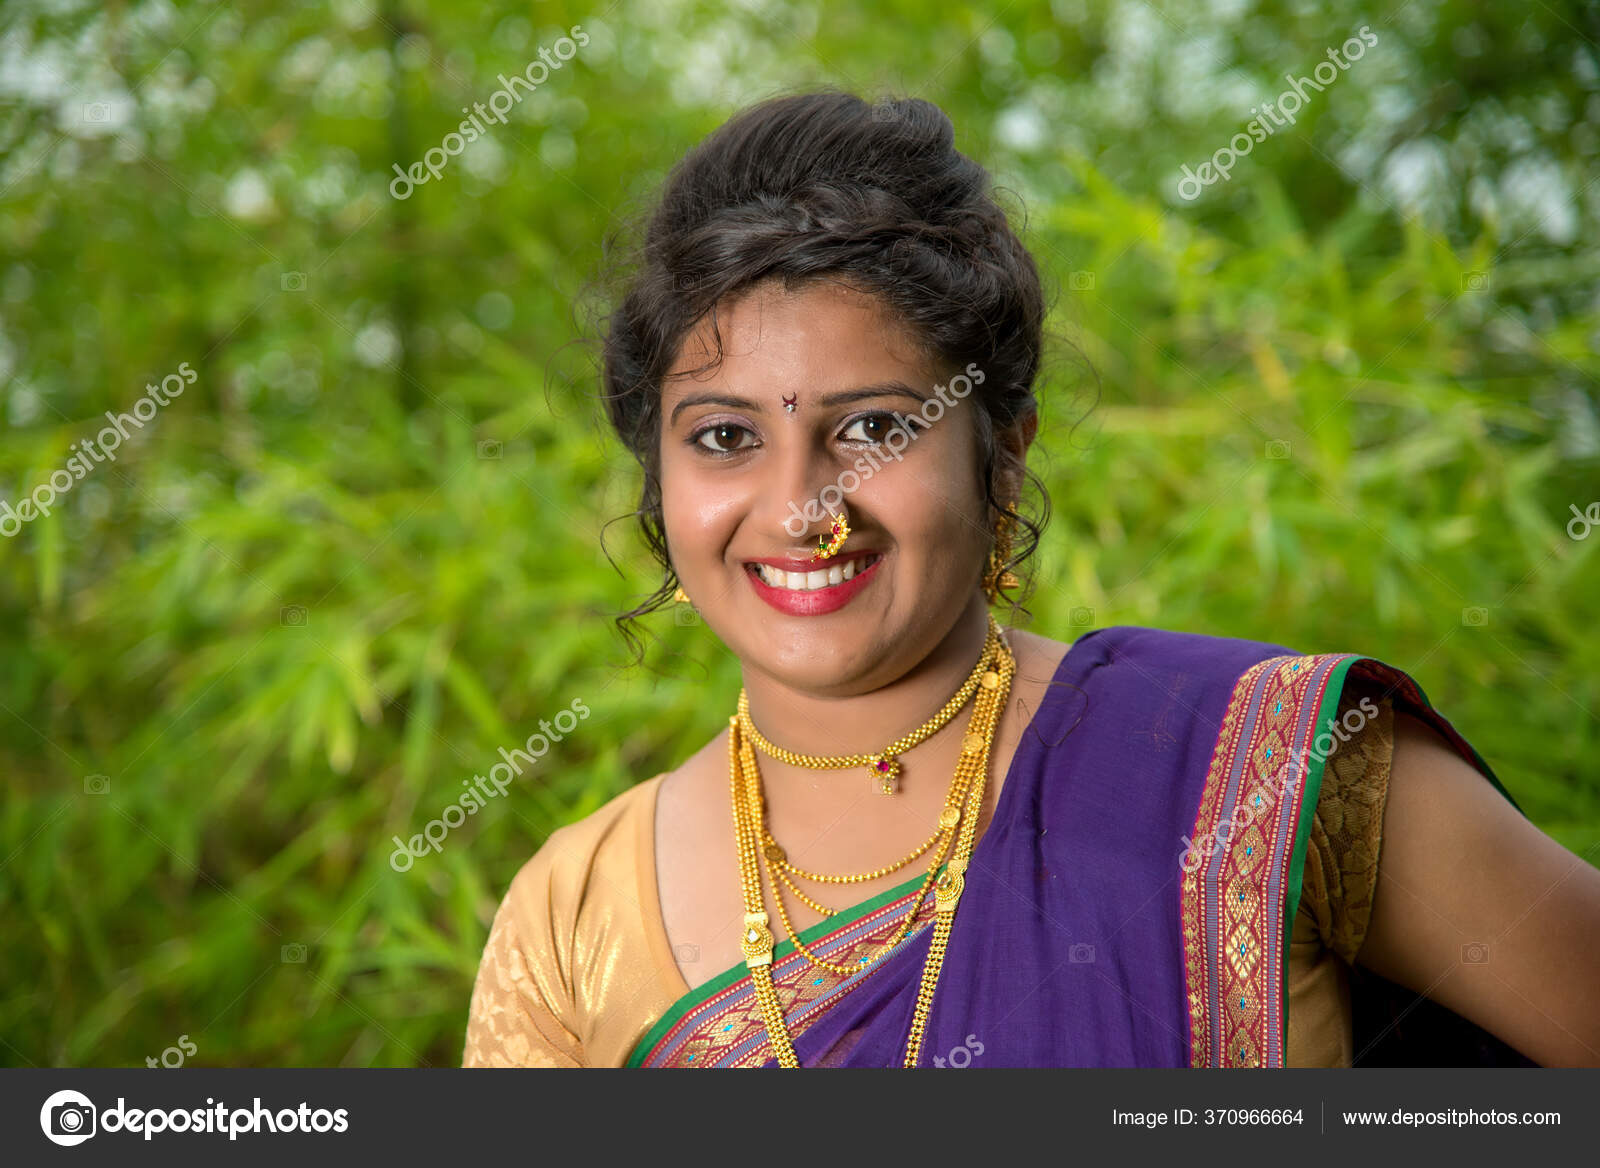 Pin by Spoorti on Beautiness of Girls | Indian beauty saree, Saree poses,  Saree photoshoot